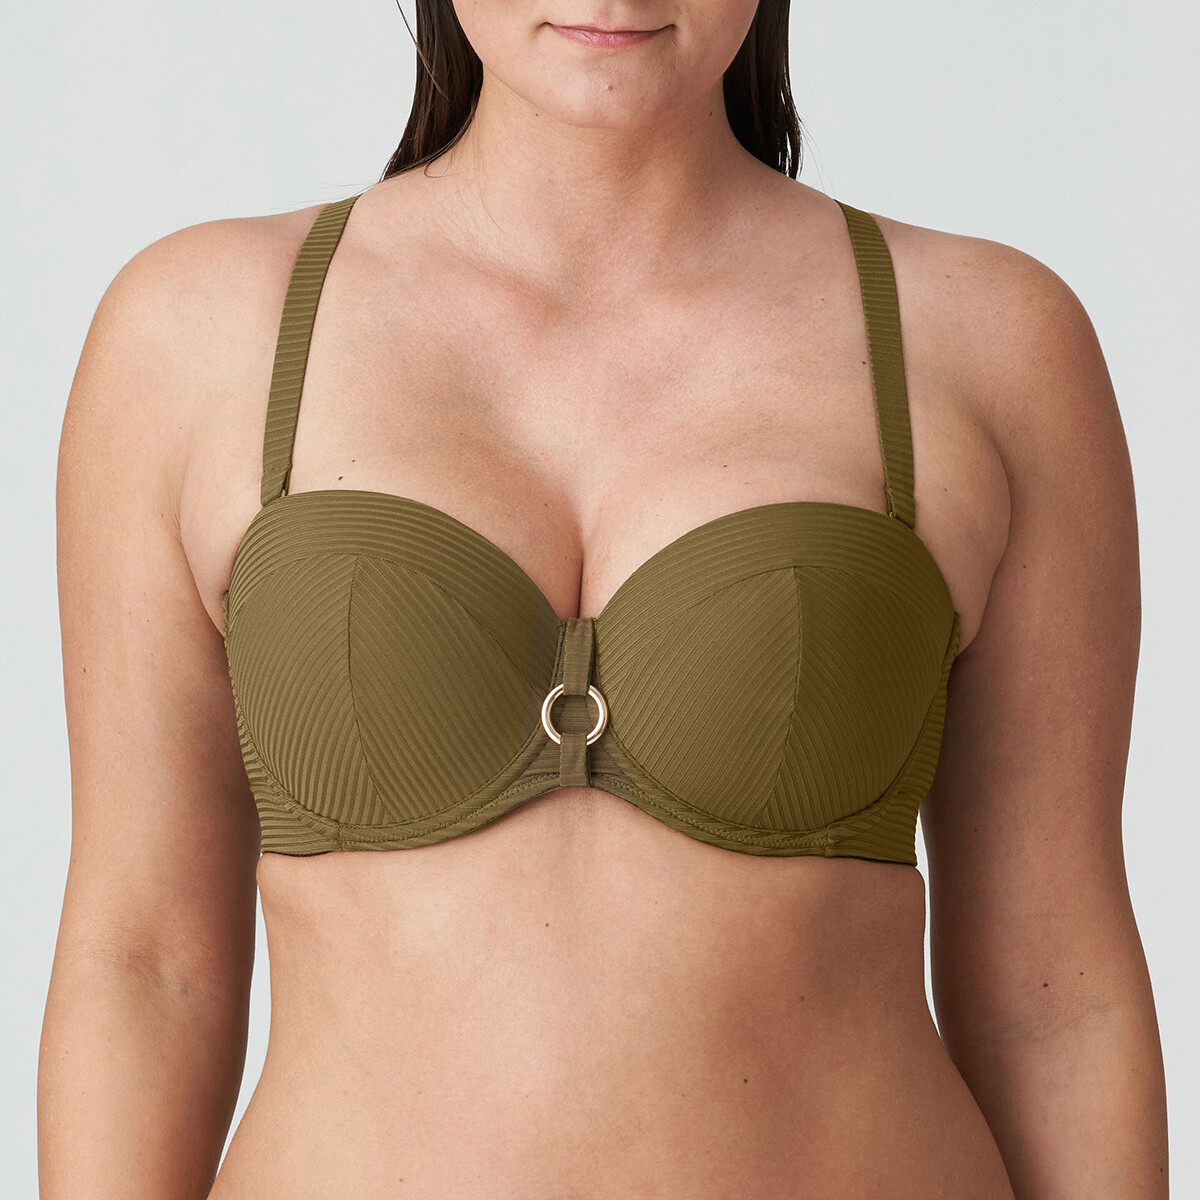 PrimaDonna Sahara Bikini Topp Med Bøjle, Farve: Grøn, Størrelse: 80D, Dame